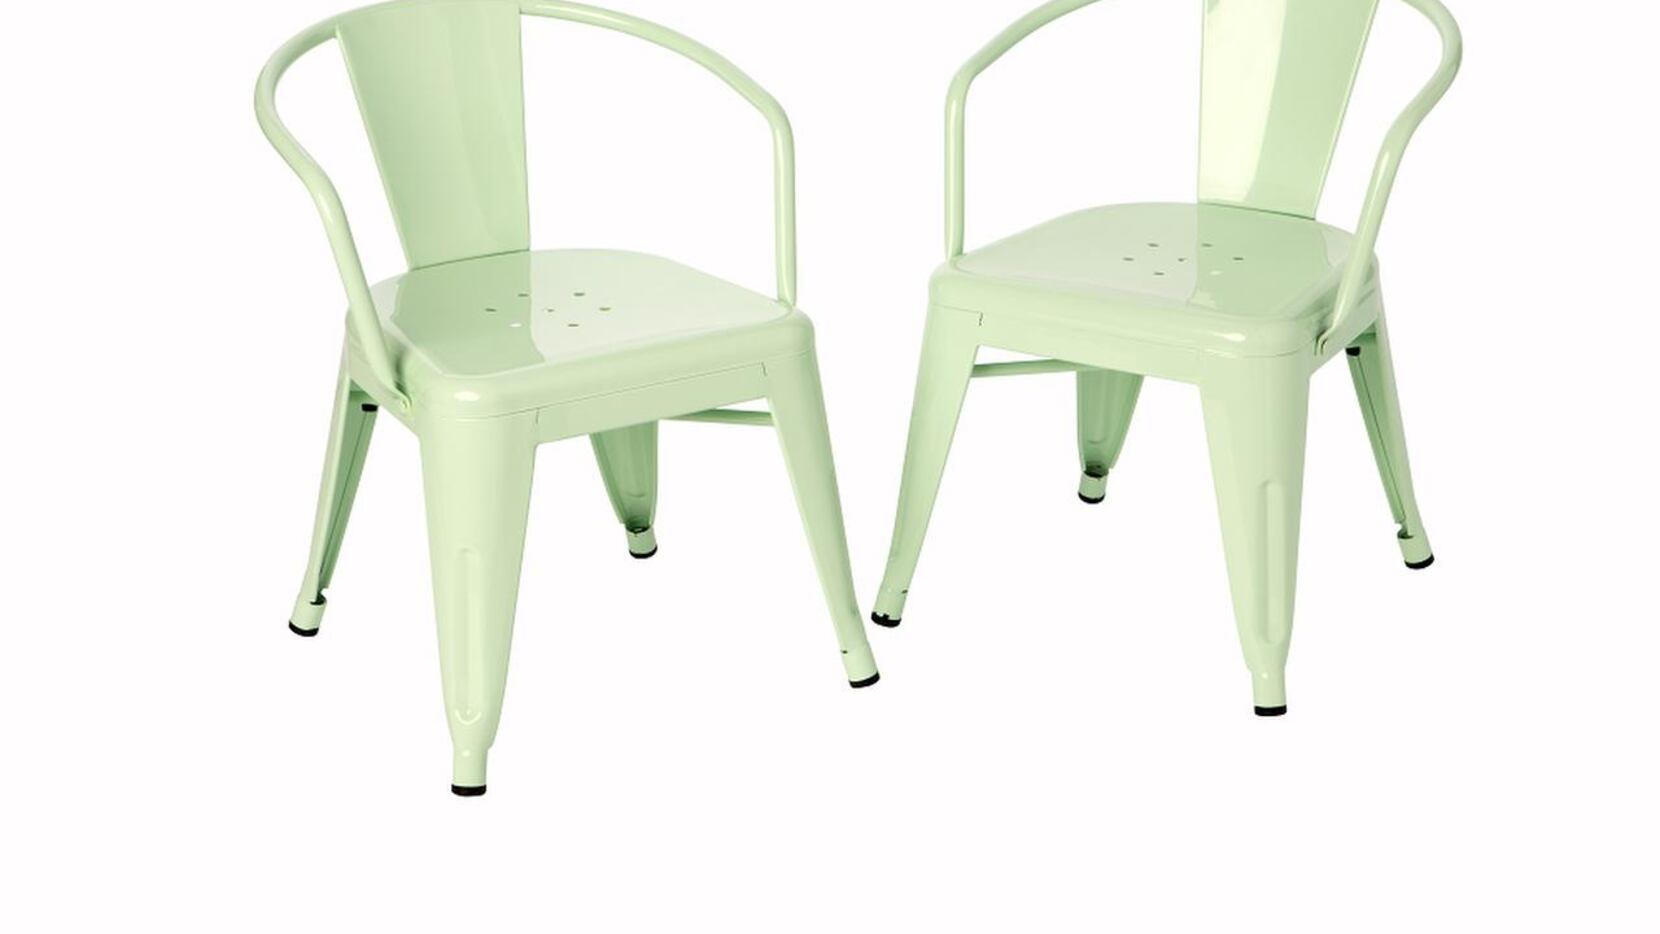 
Industrial Activity Chair Set in Aqua Mint, $79.99
